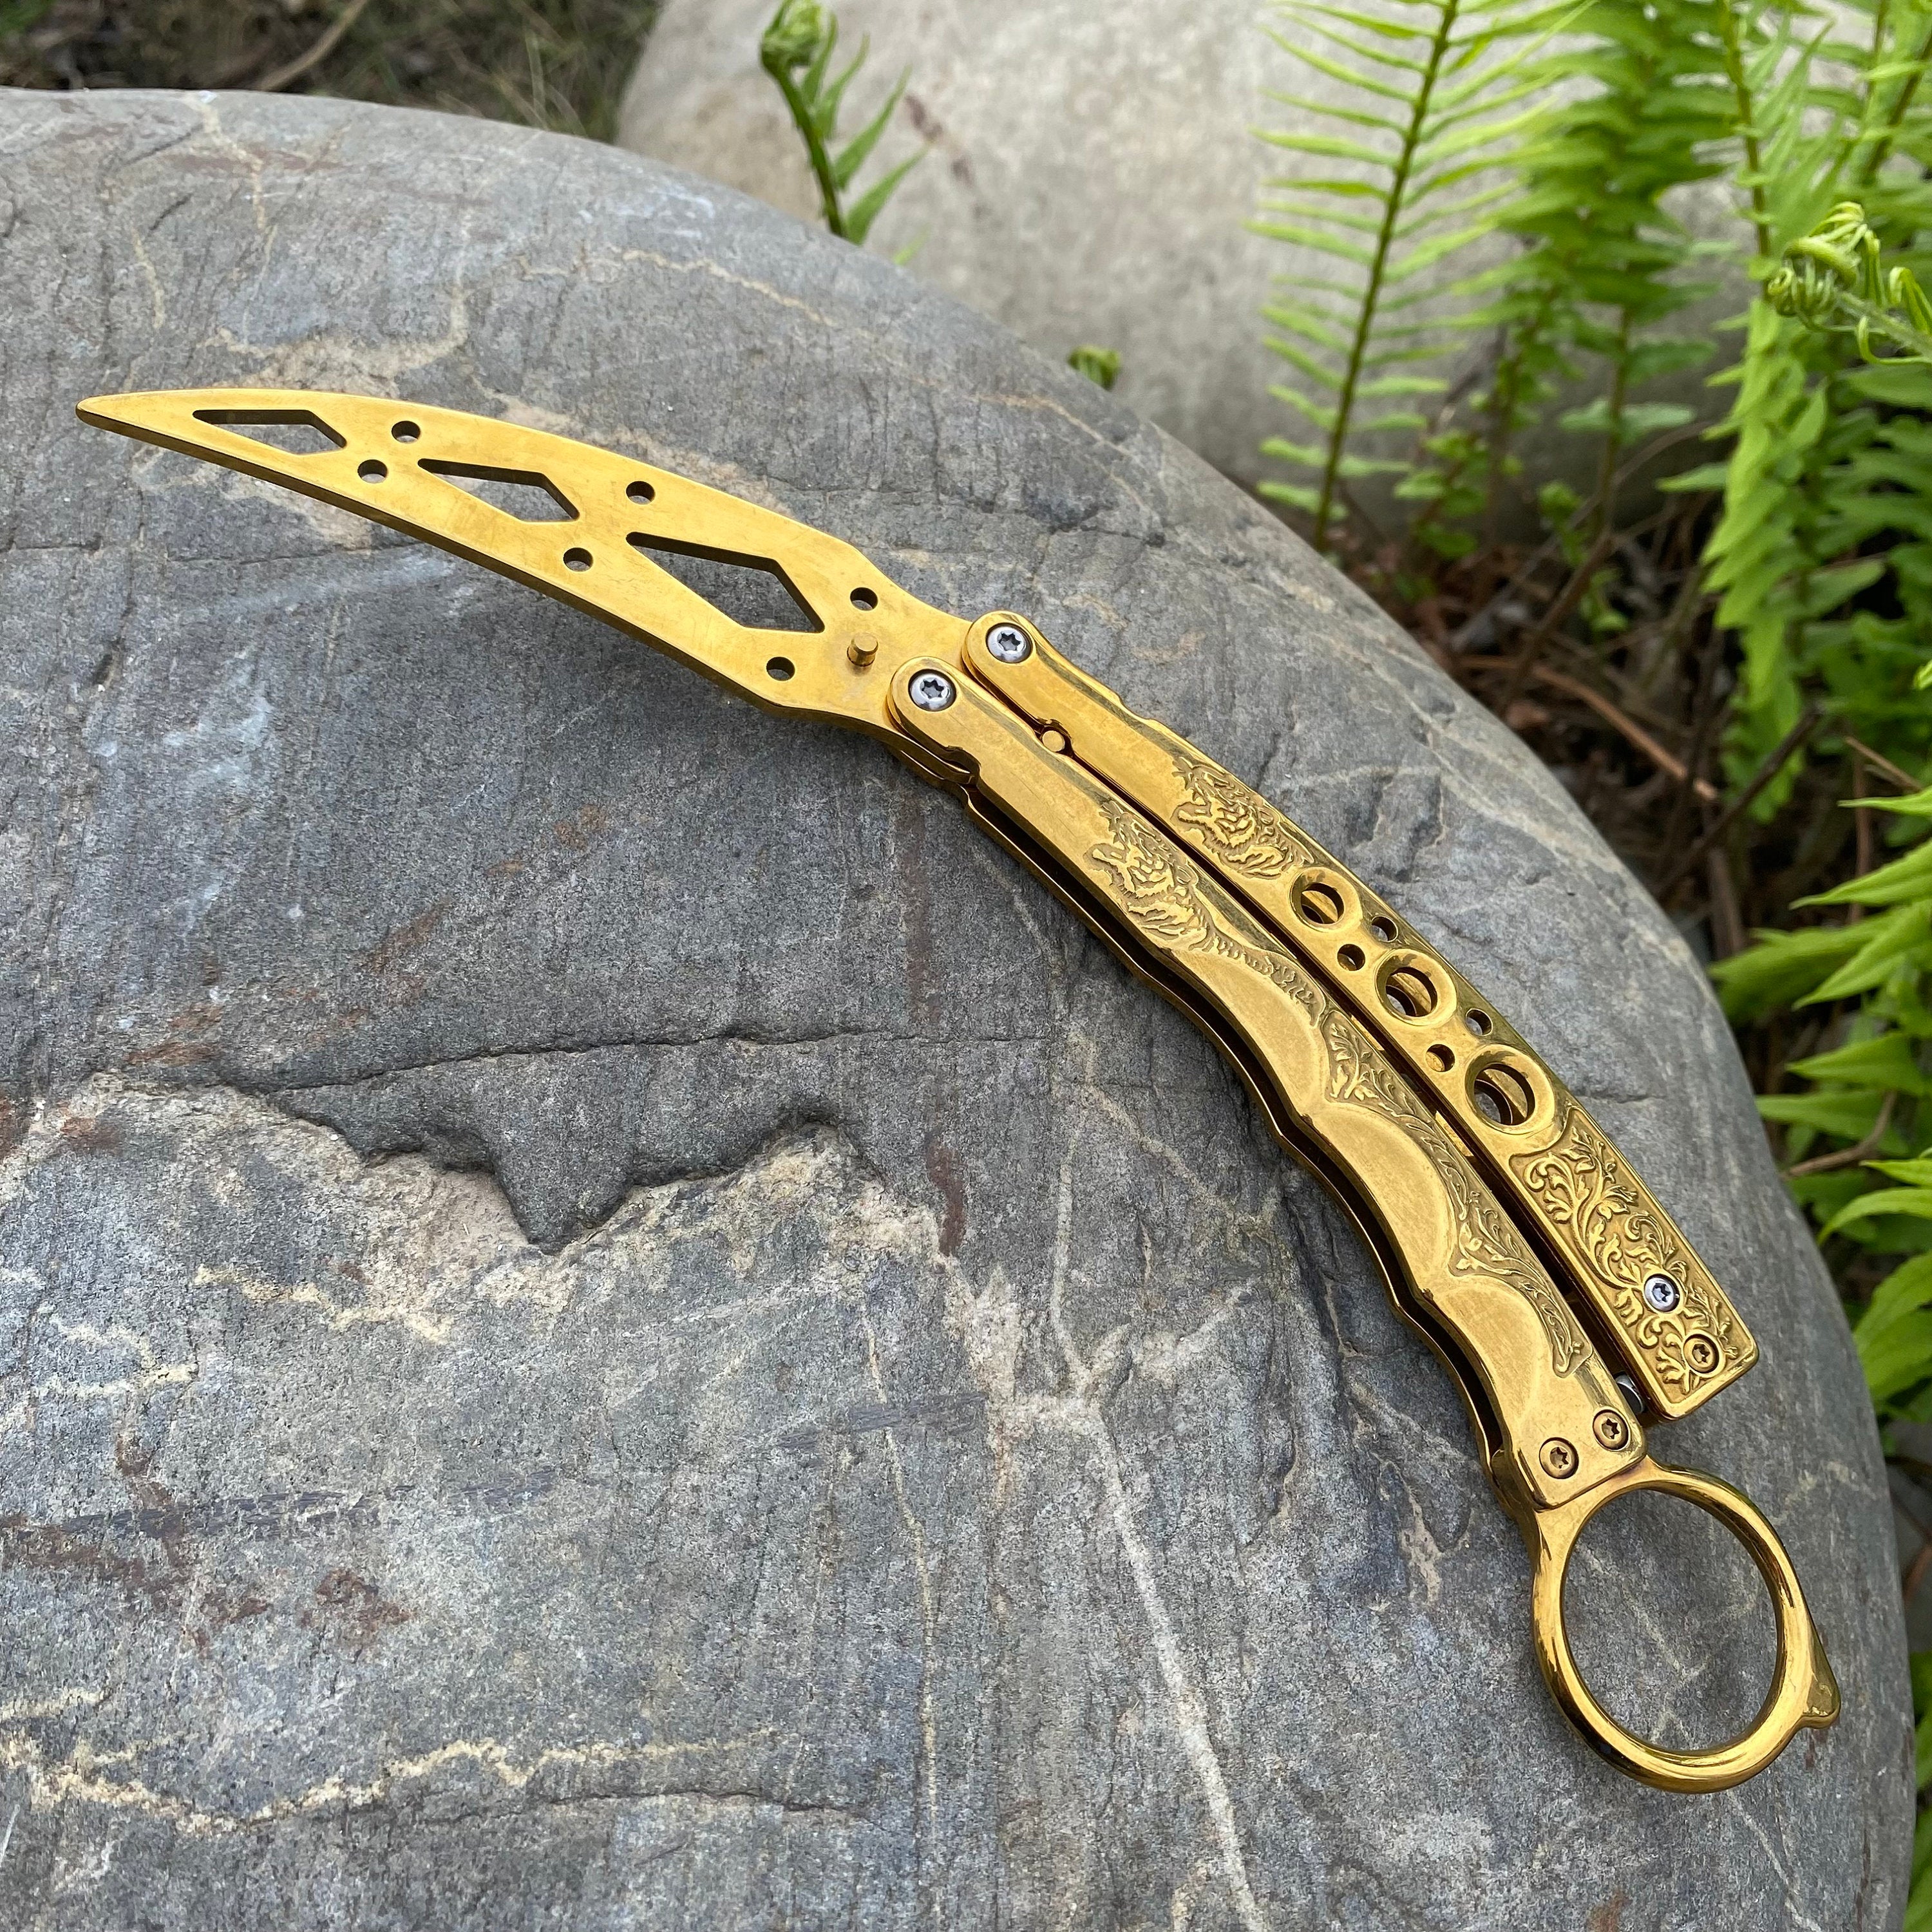 Gold Butterfly Knife